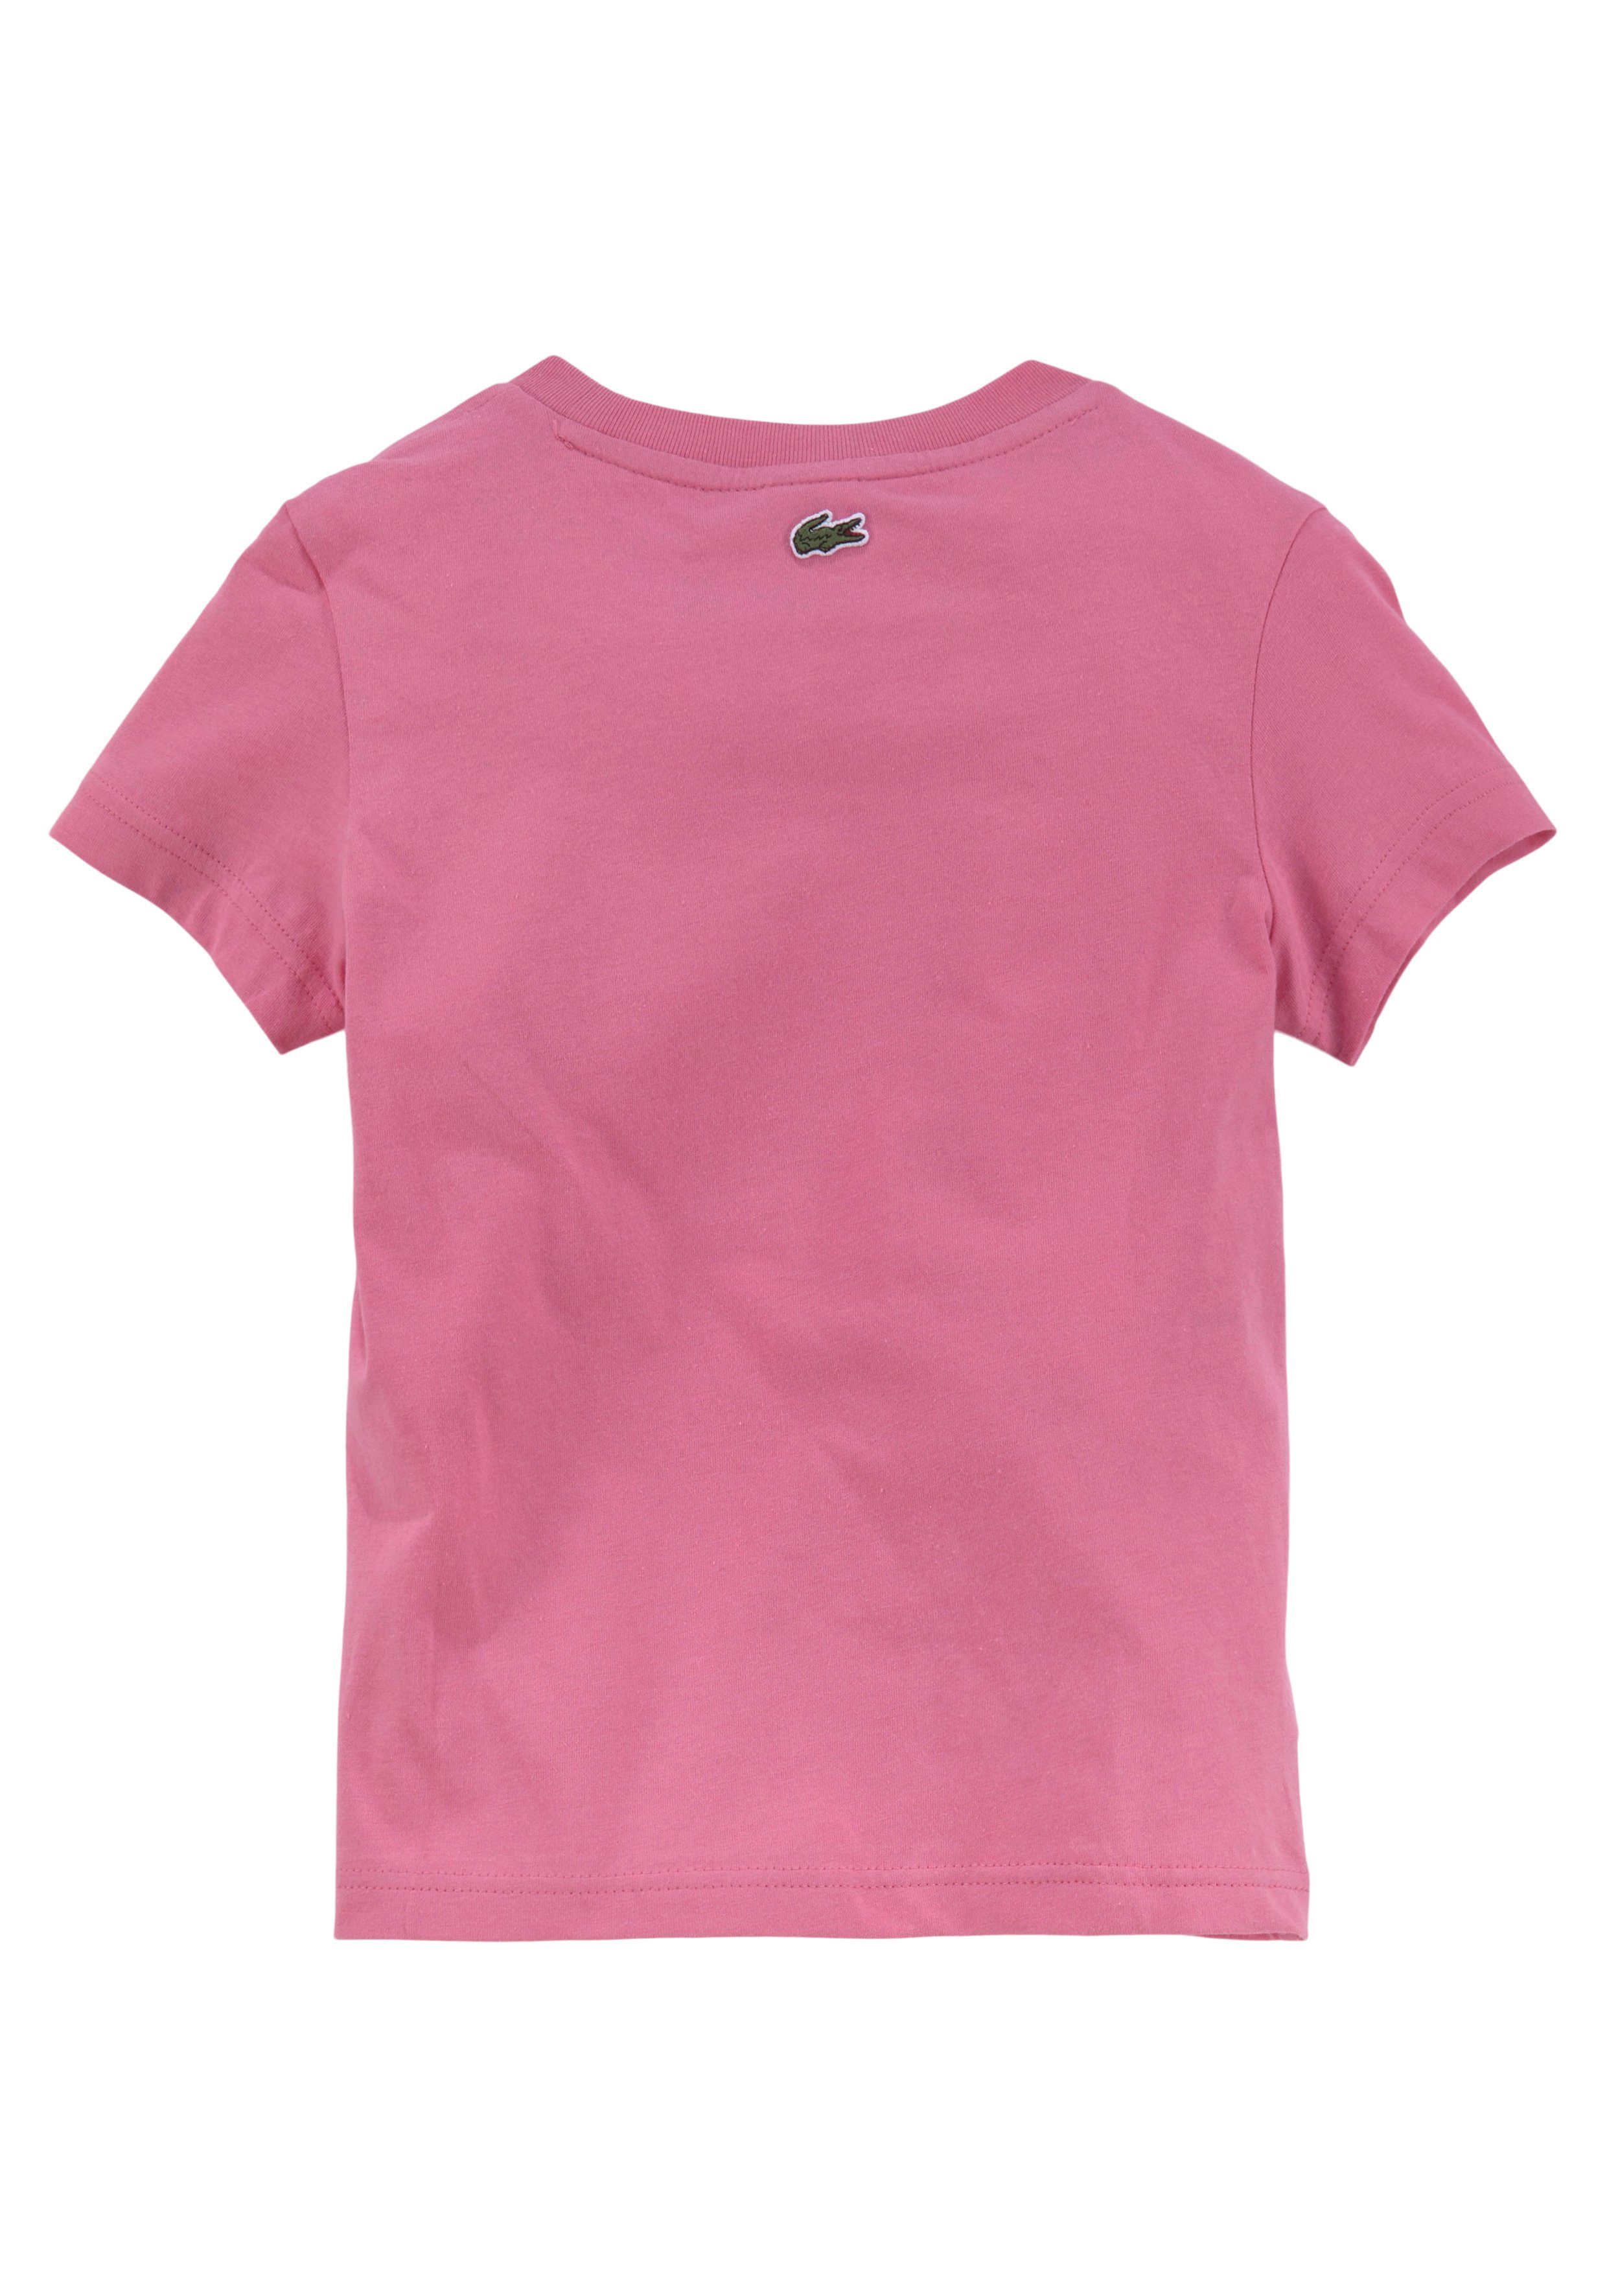 reseda großem Logodruck Lacoste mit T-Shirt pink